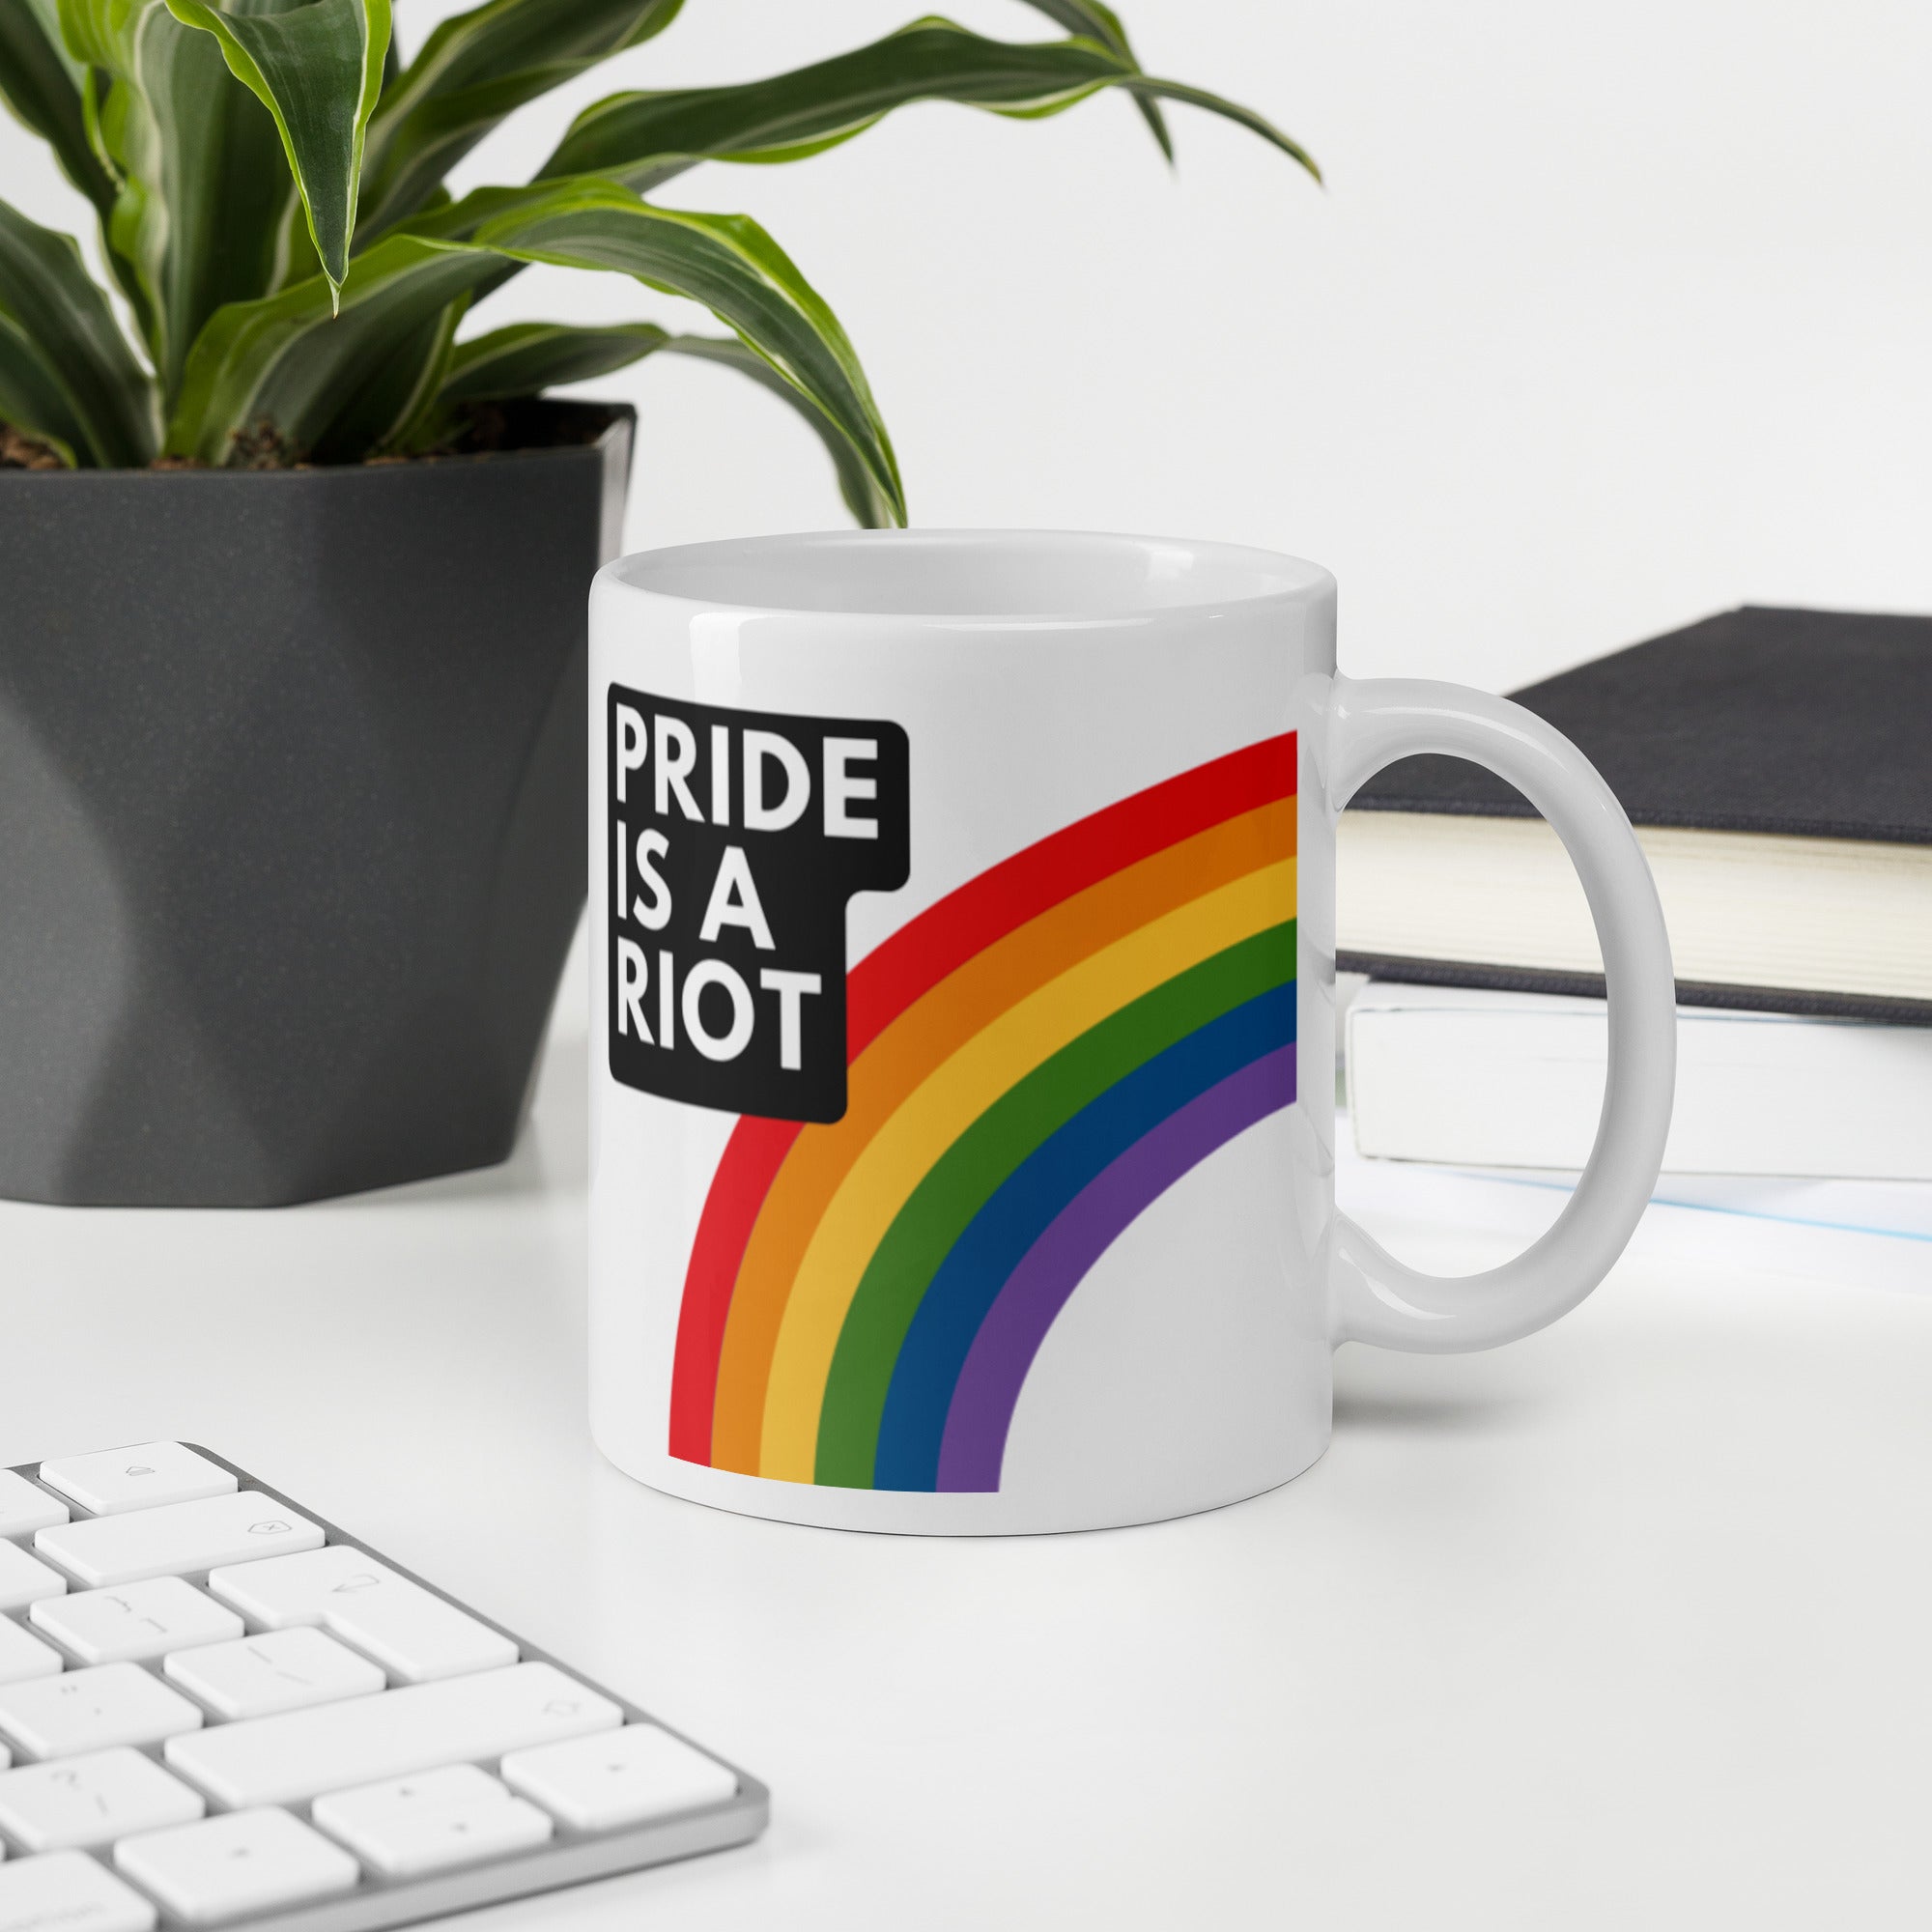 Pride Is A Riot - White glossy mug